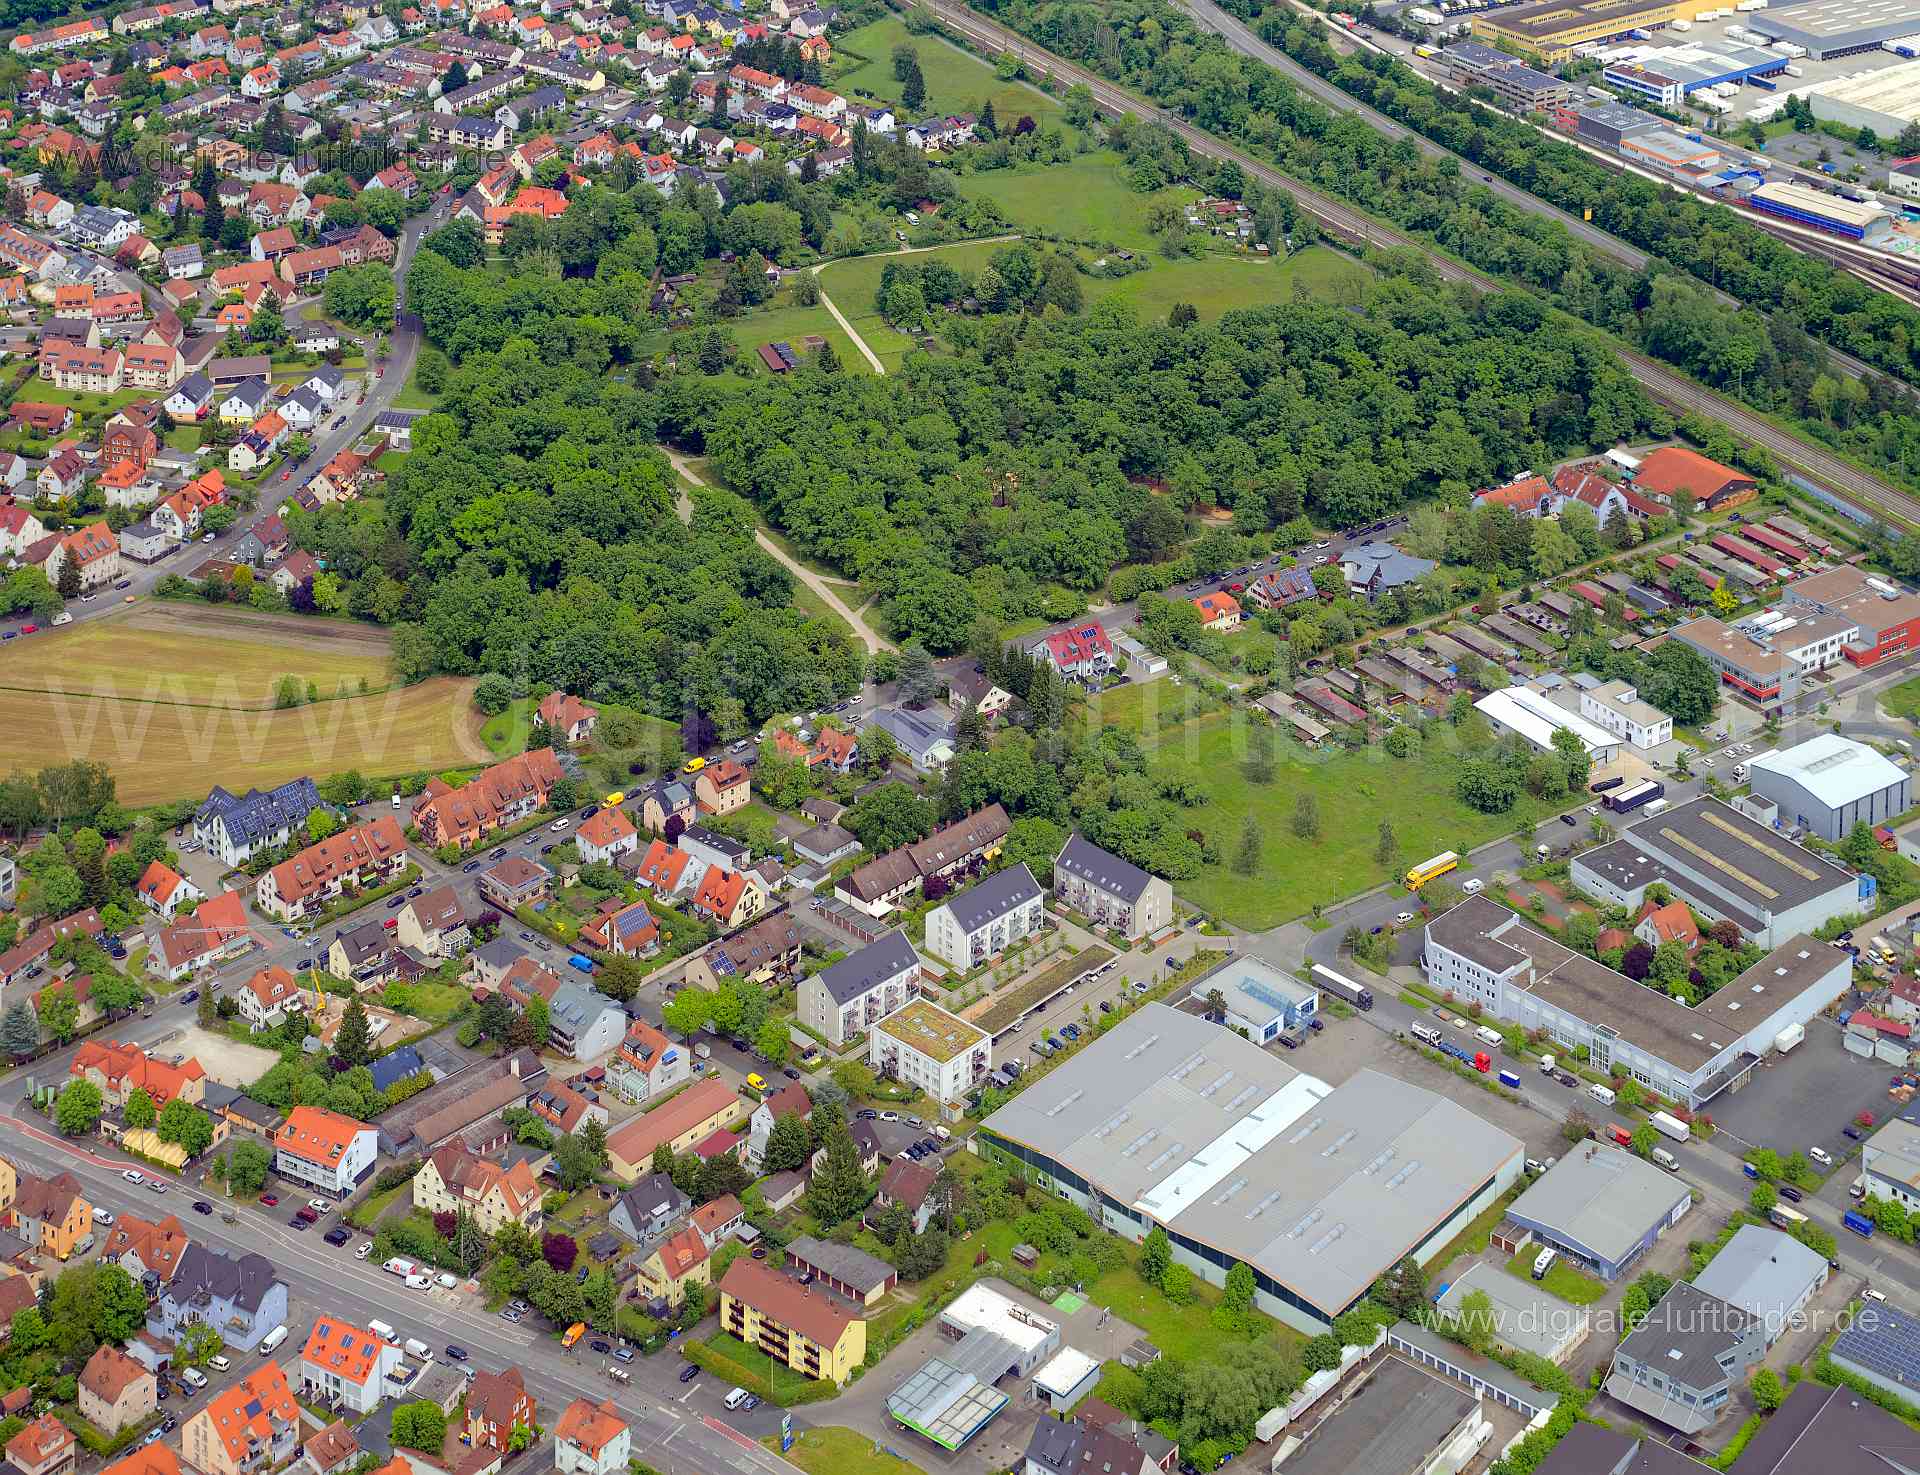 Luftbild - Eibach, Ort: Nürnberg, Tags: Eibach, GZV Nürnberg-Eibach, , Eibacher Hauptstraße, Eibacher Schulstraße, Forstwe...